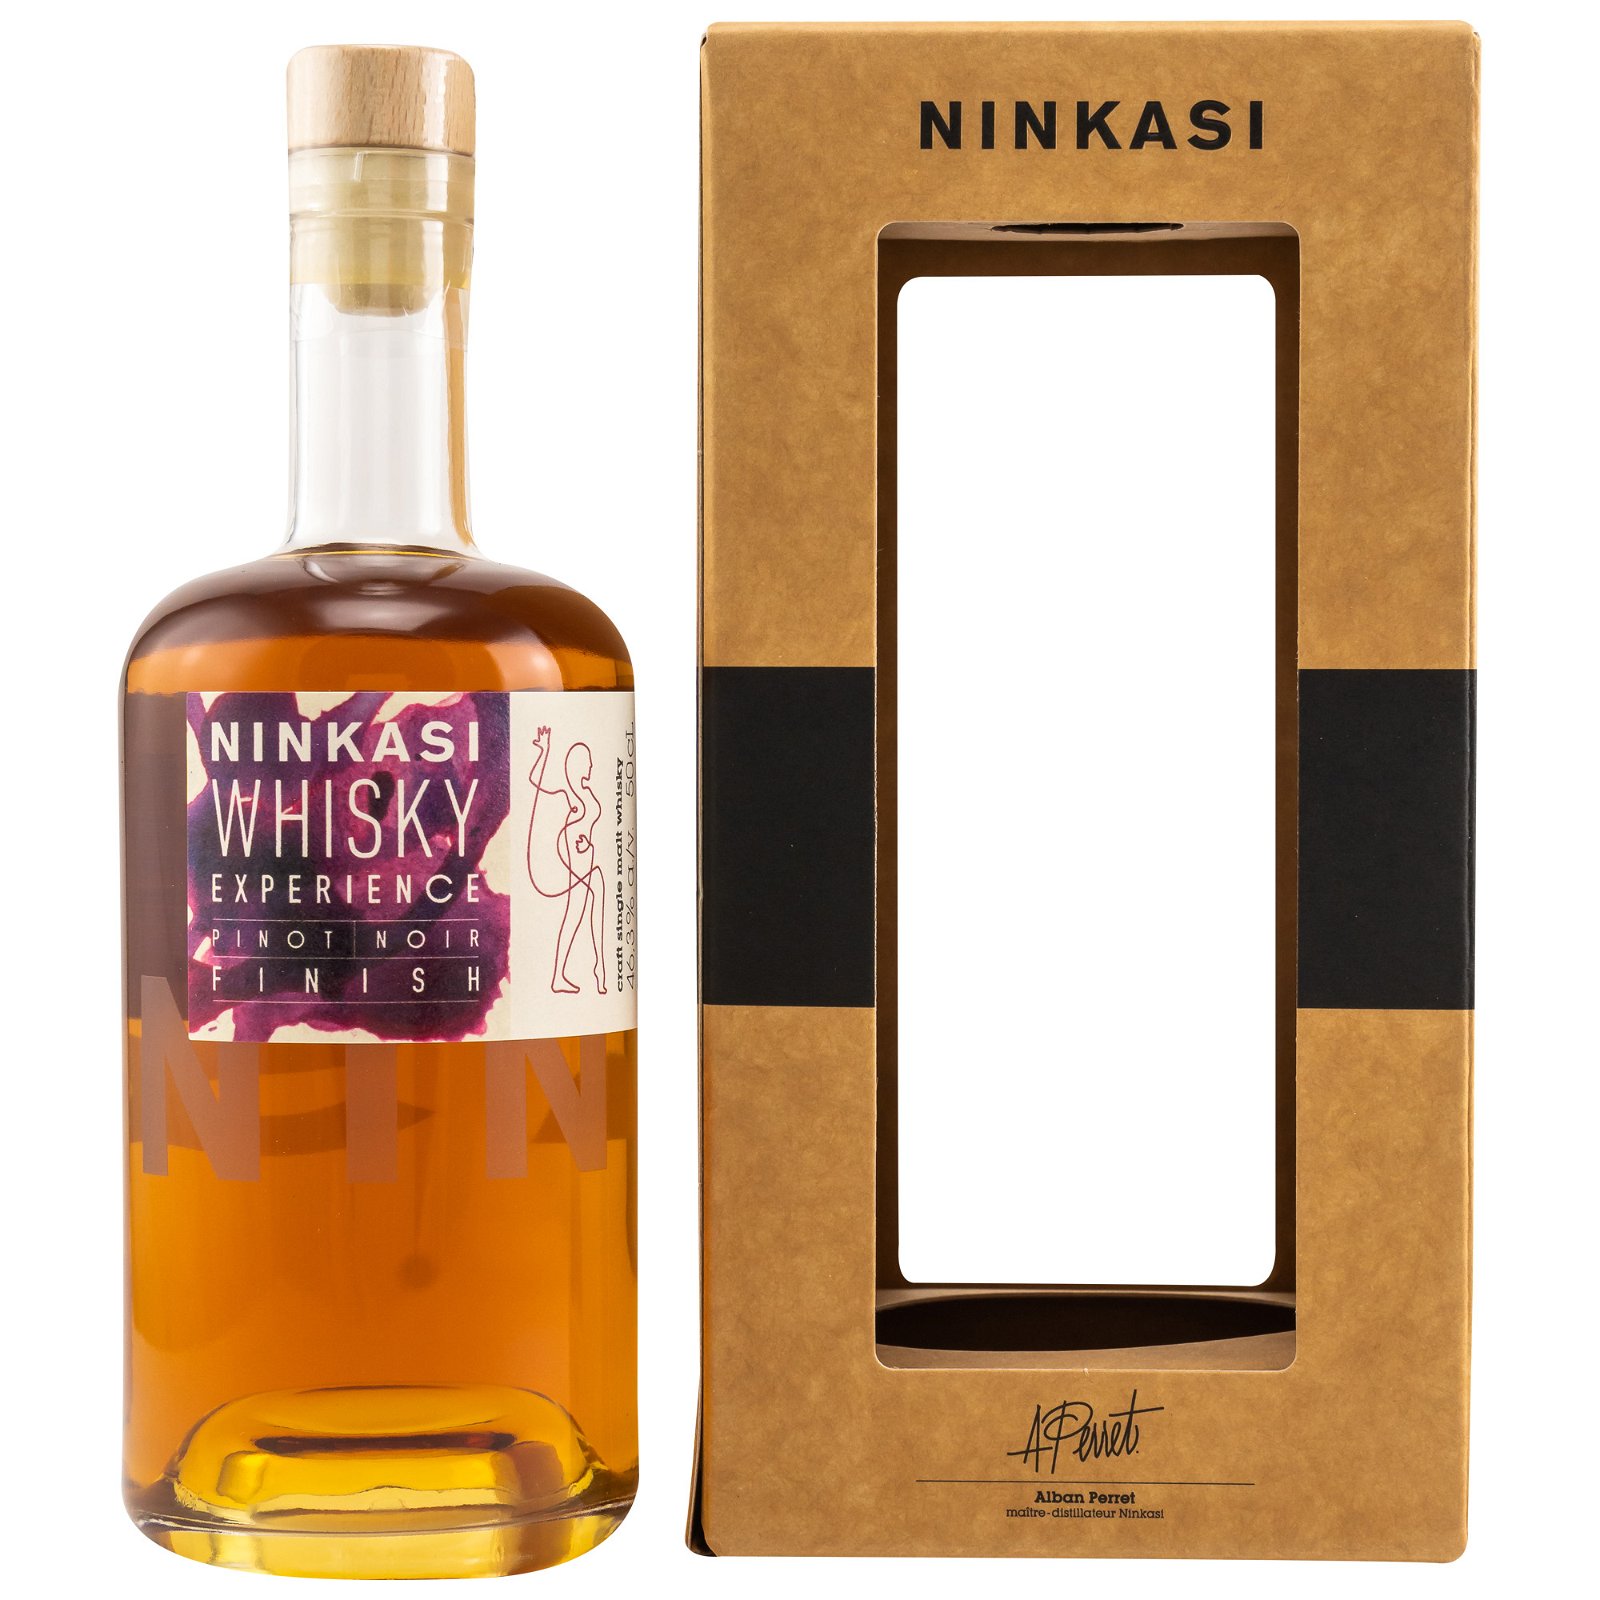 Ninkasi 2017/2020 - 3 Jahre Experience Pinot Noir Finish